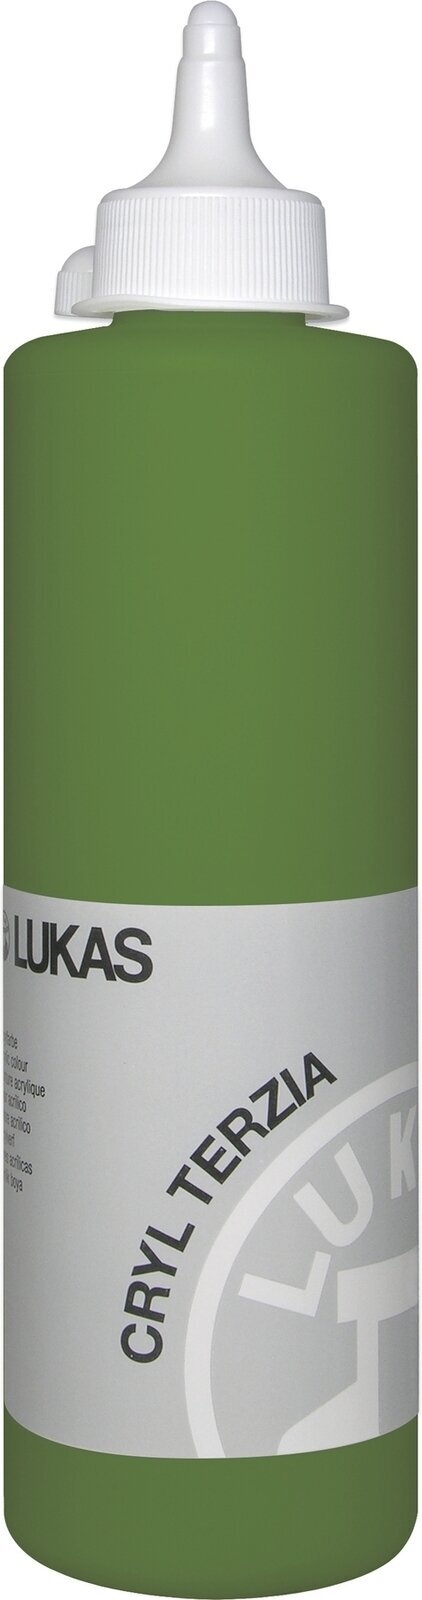 Akrylová farba Lukas Cryl Terzia Acrylic Paint Plastic Bottle Akrylová farba Sap Green 500 ml 1 ks